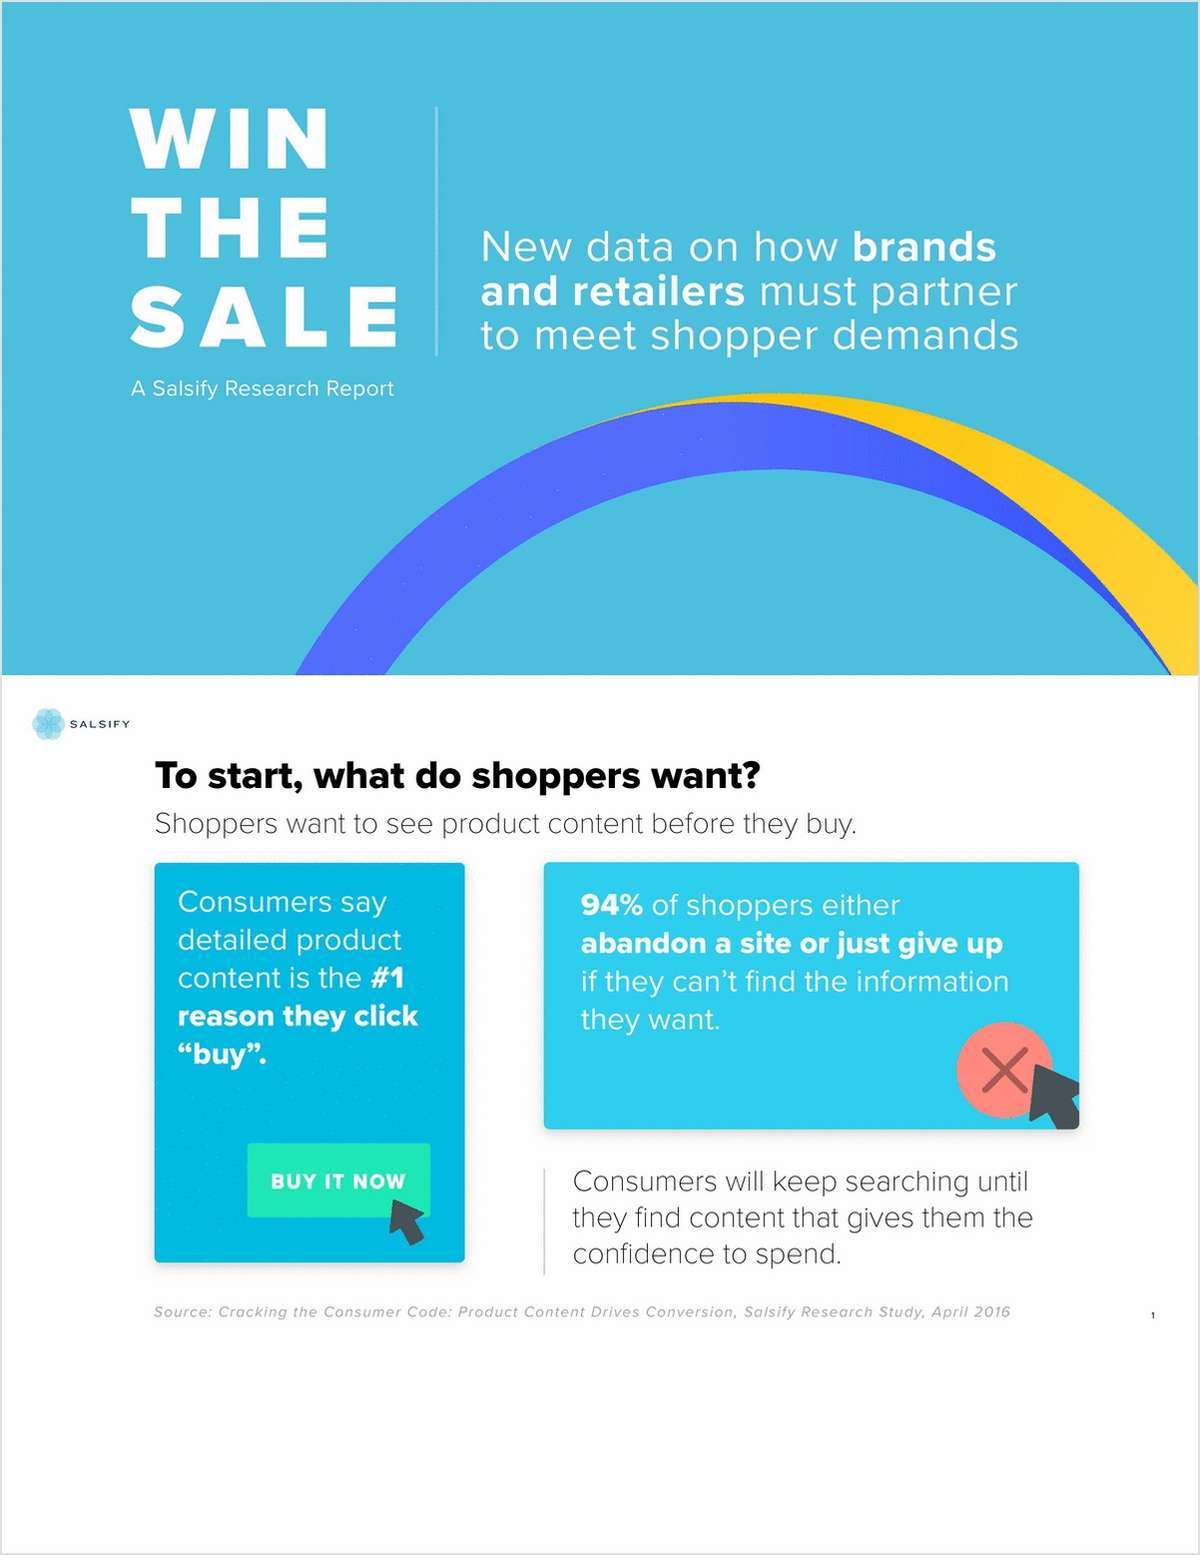 How Brands and Retailers Must Partner to Meet Shopper Demands